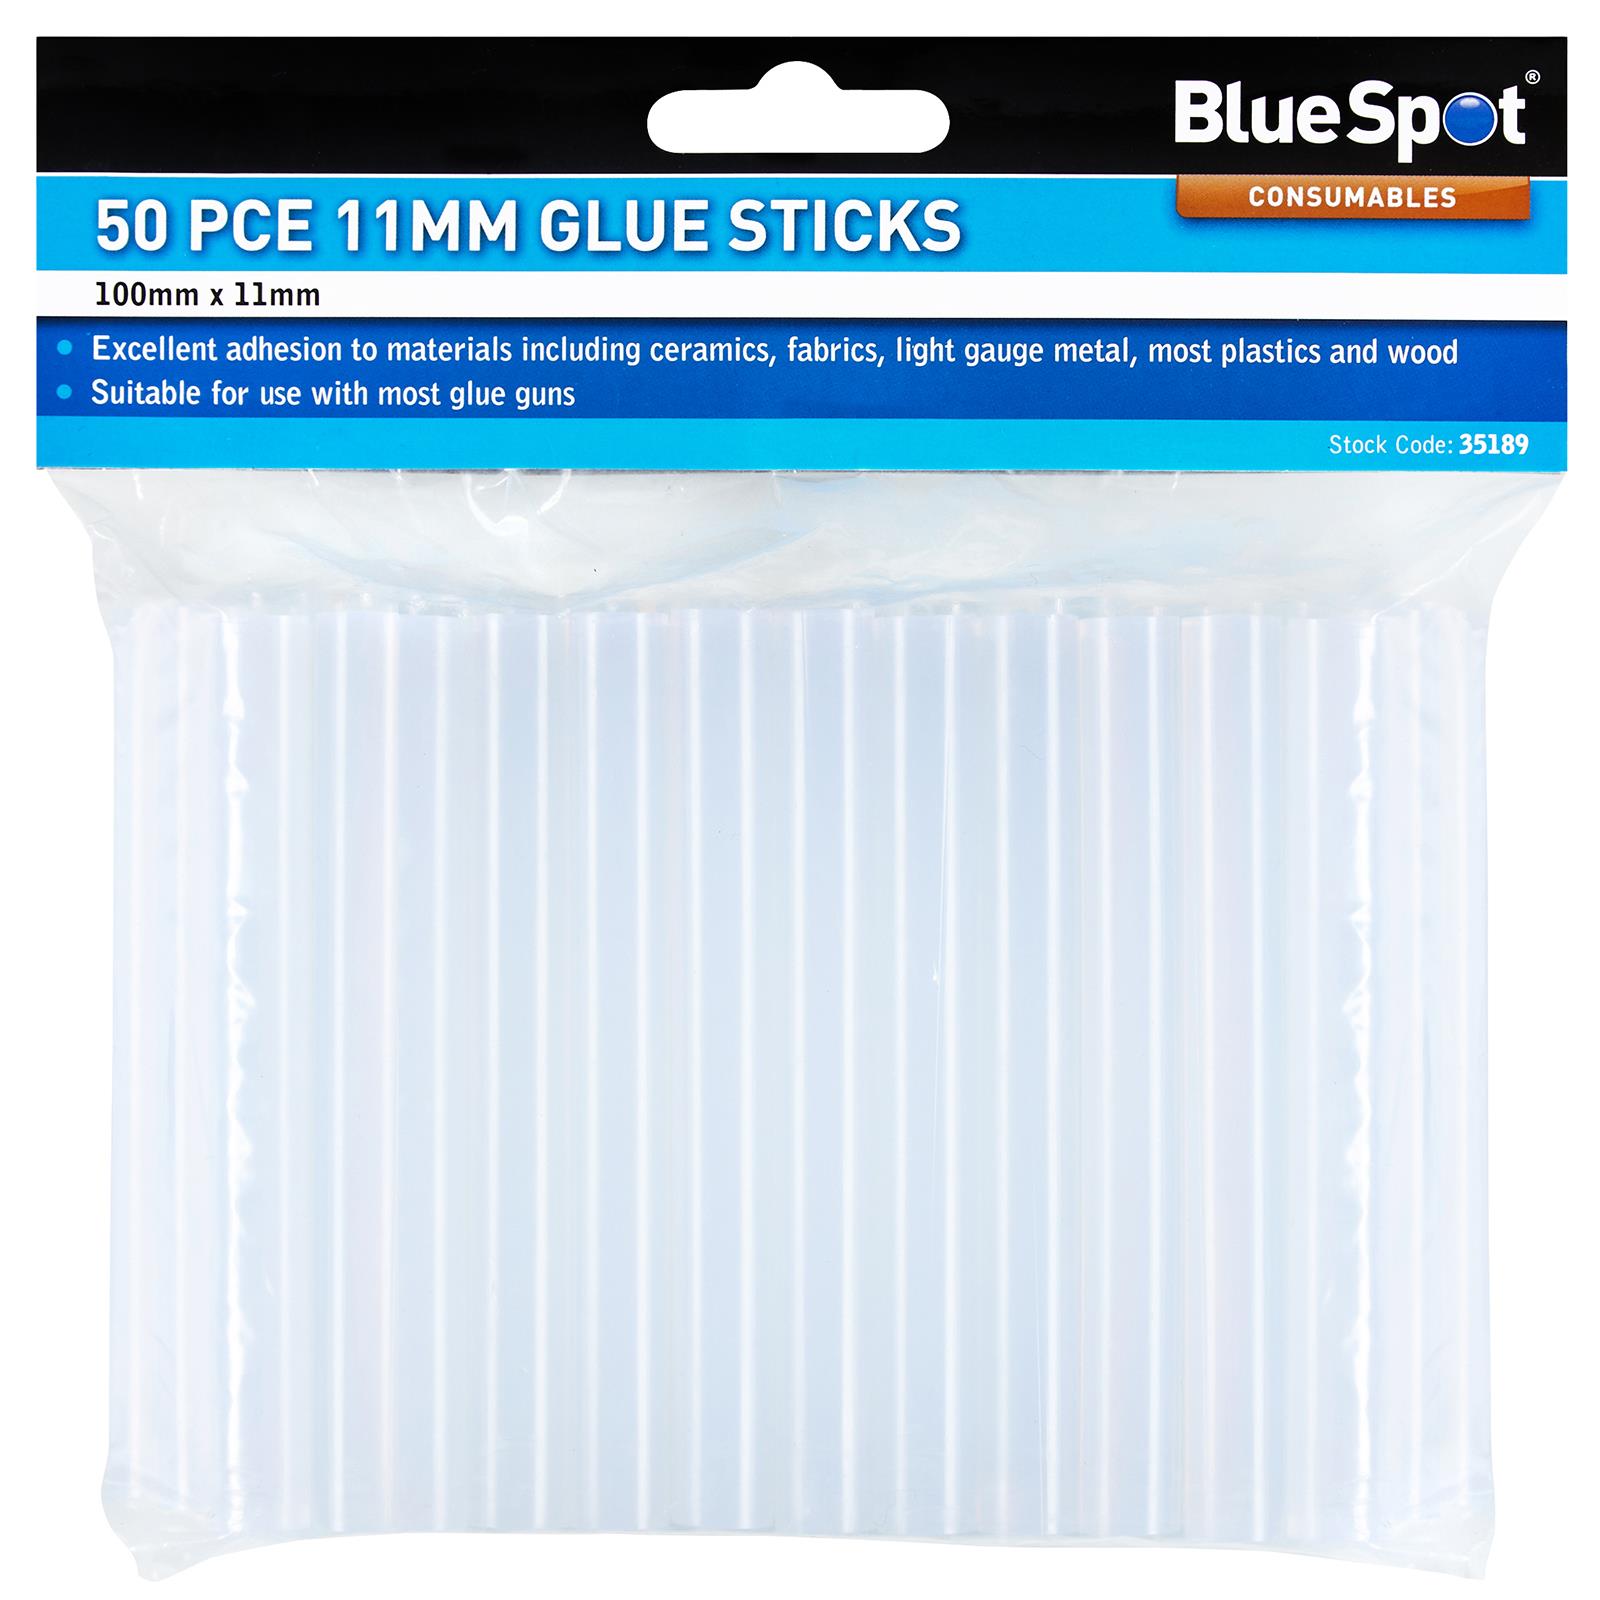 BlueSpot 11mm Glue Sticks 50 Pieces